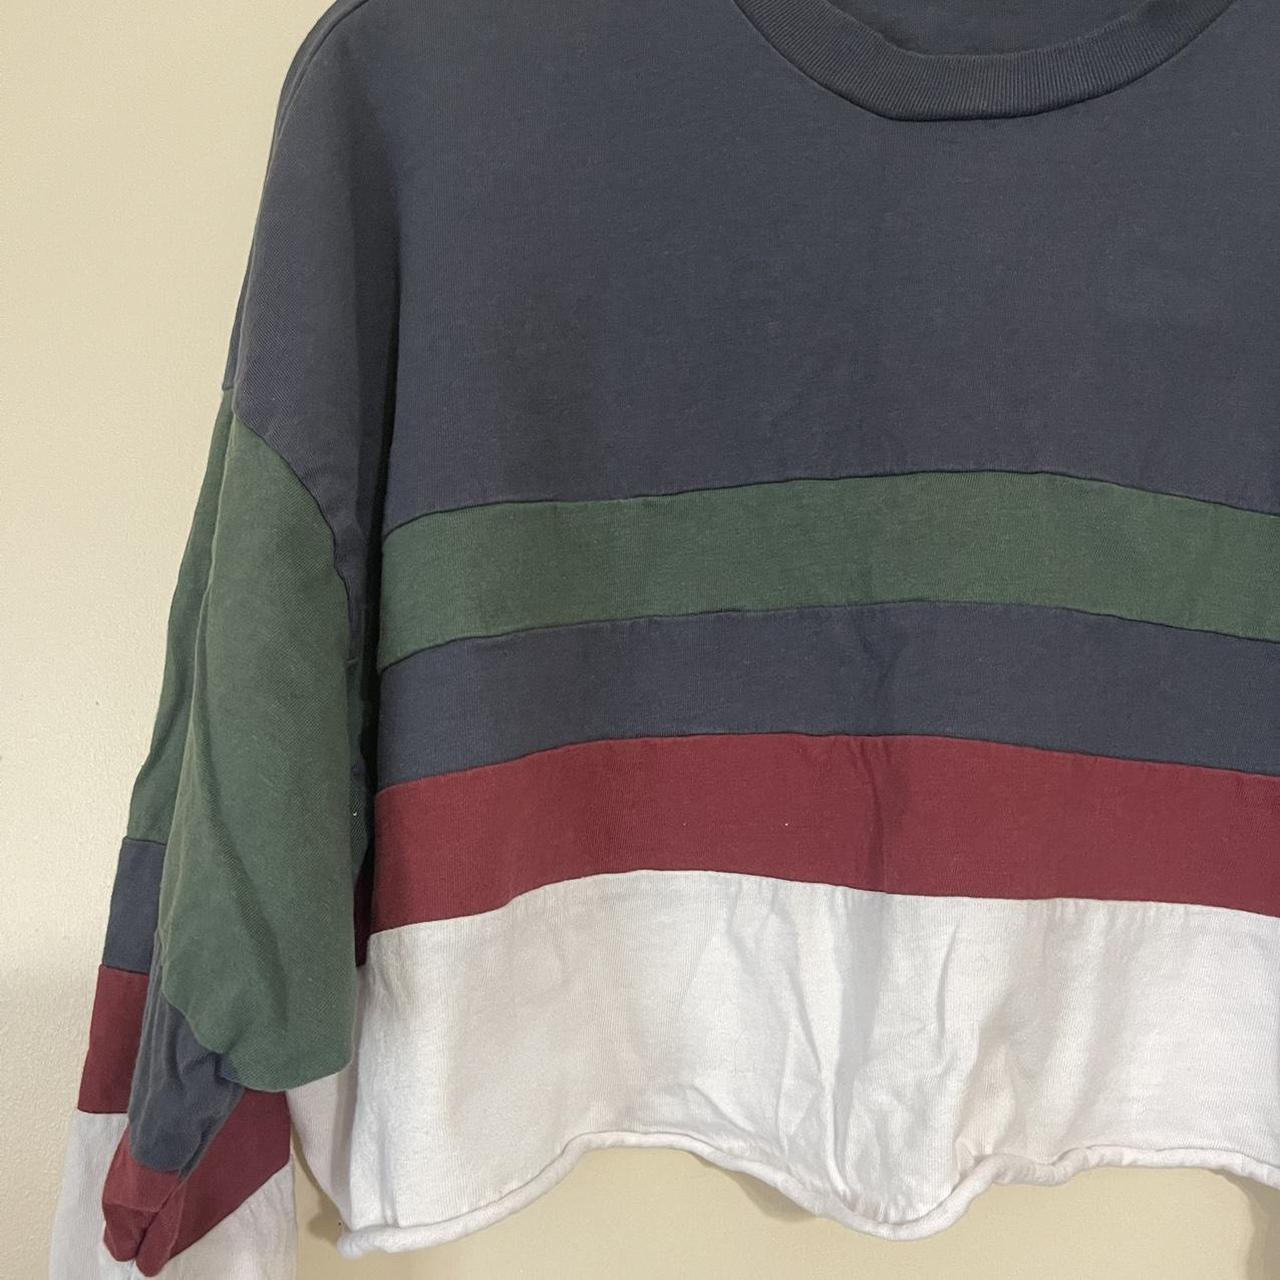 Fitz & Eddi color block top, striped, 100% cotton, - Depop